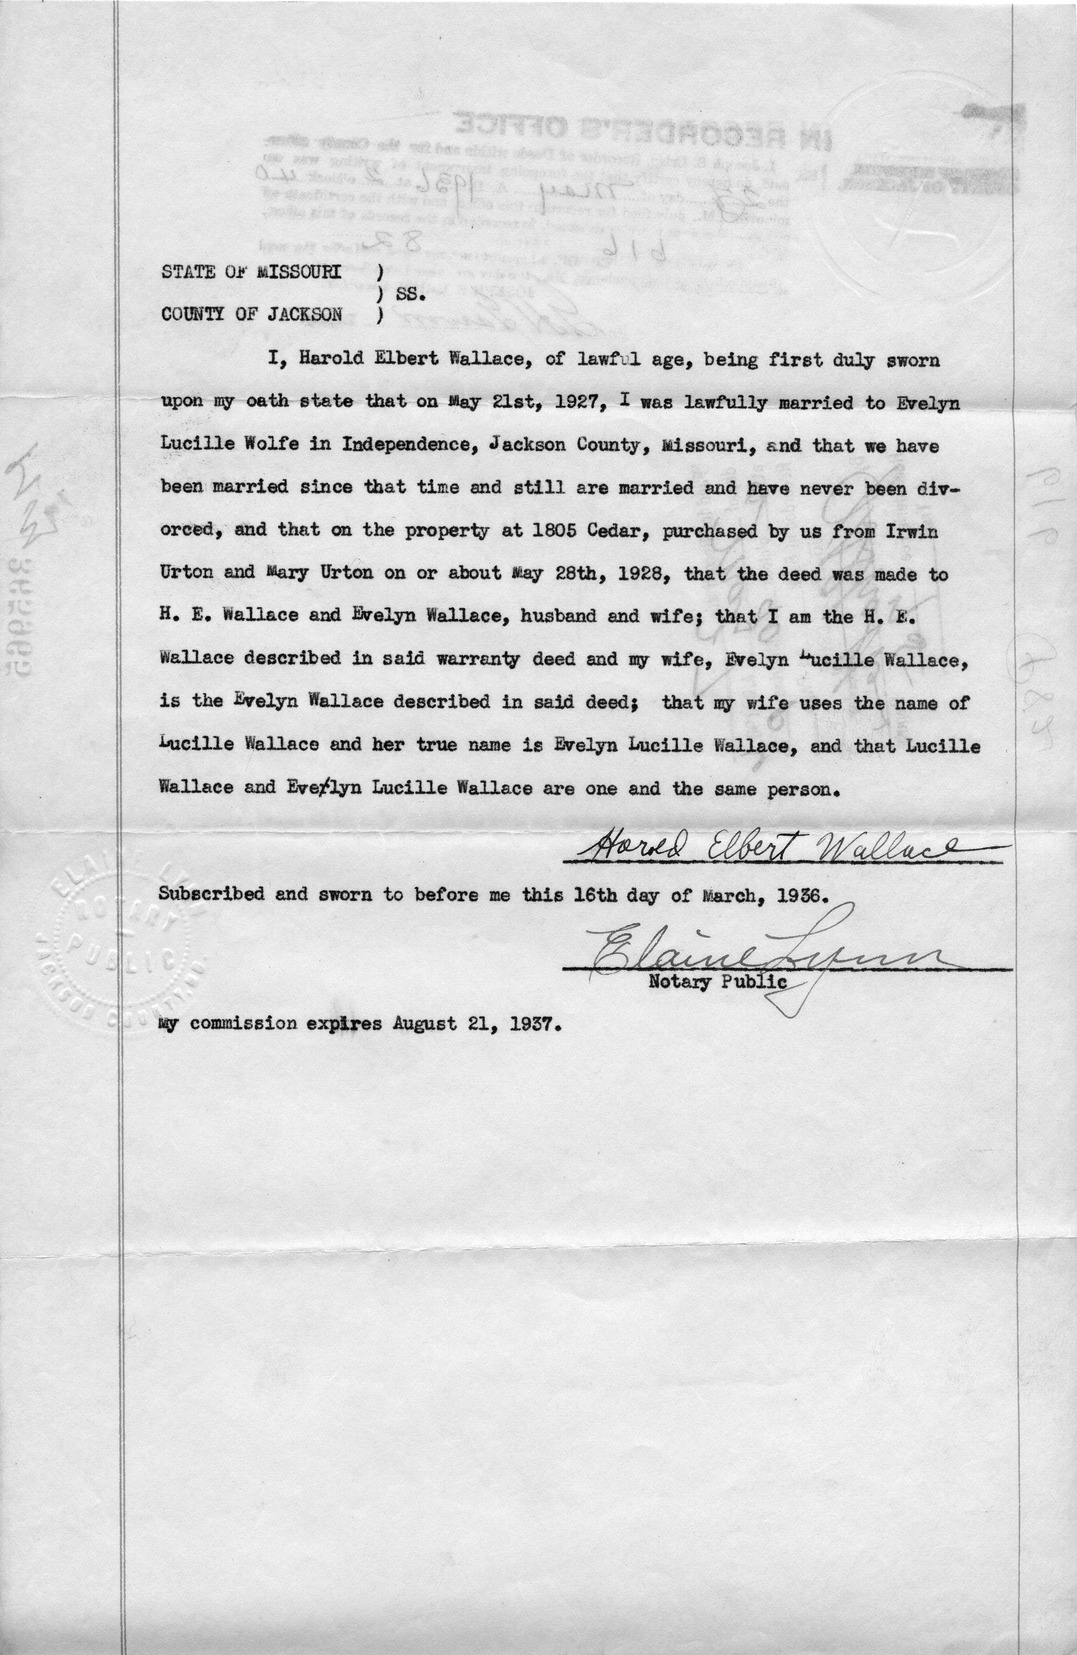 Affidavit of Harold Elbert Wallace